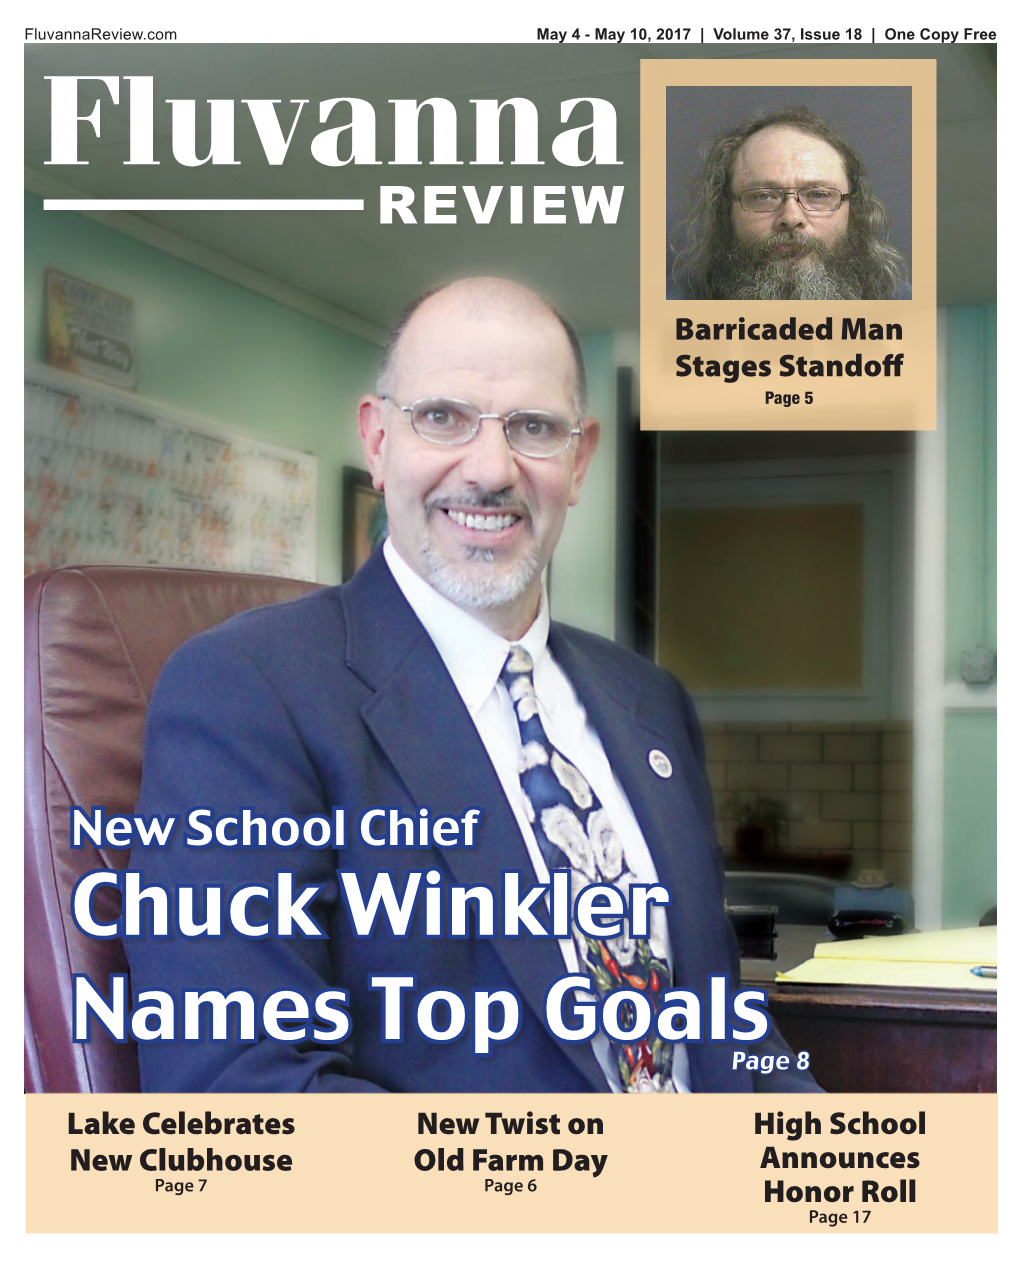 Chuck Winkler Names Top Goals Page 8